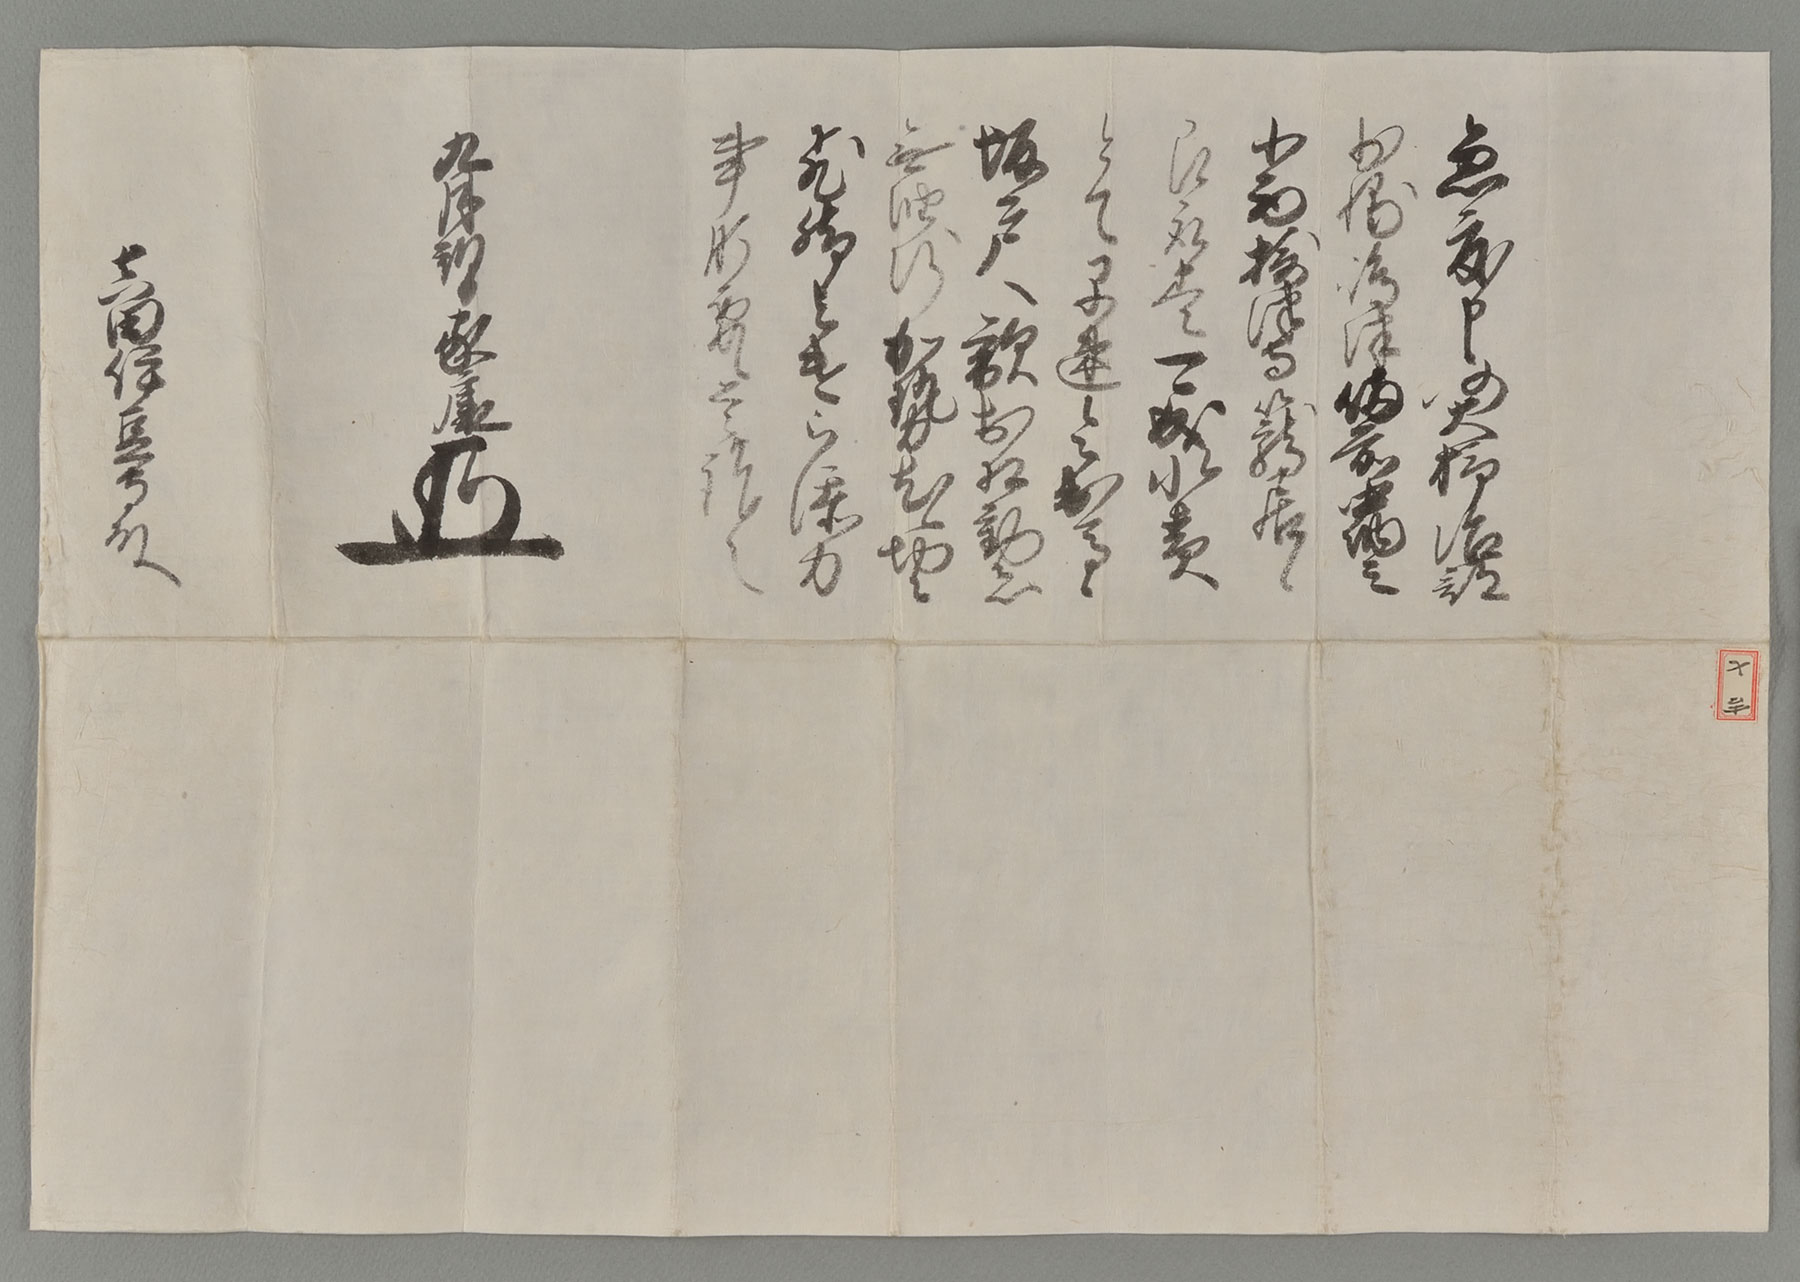 Letter from Tokugawa Ieyasu to Sanada Nobuyuki